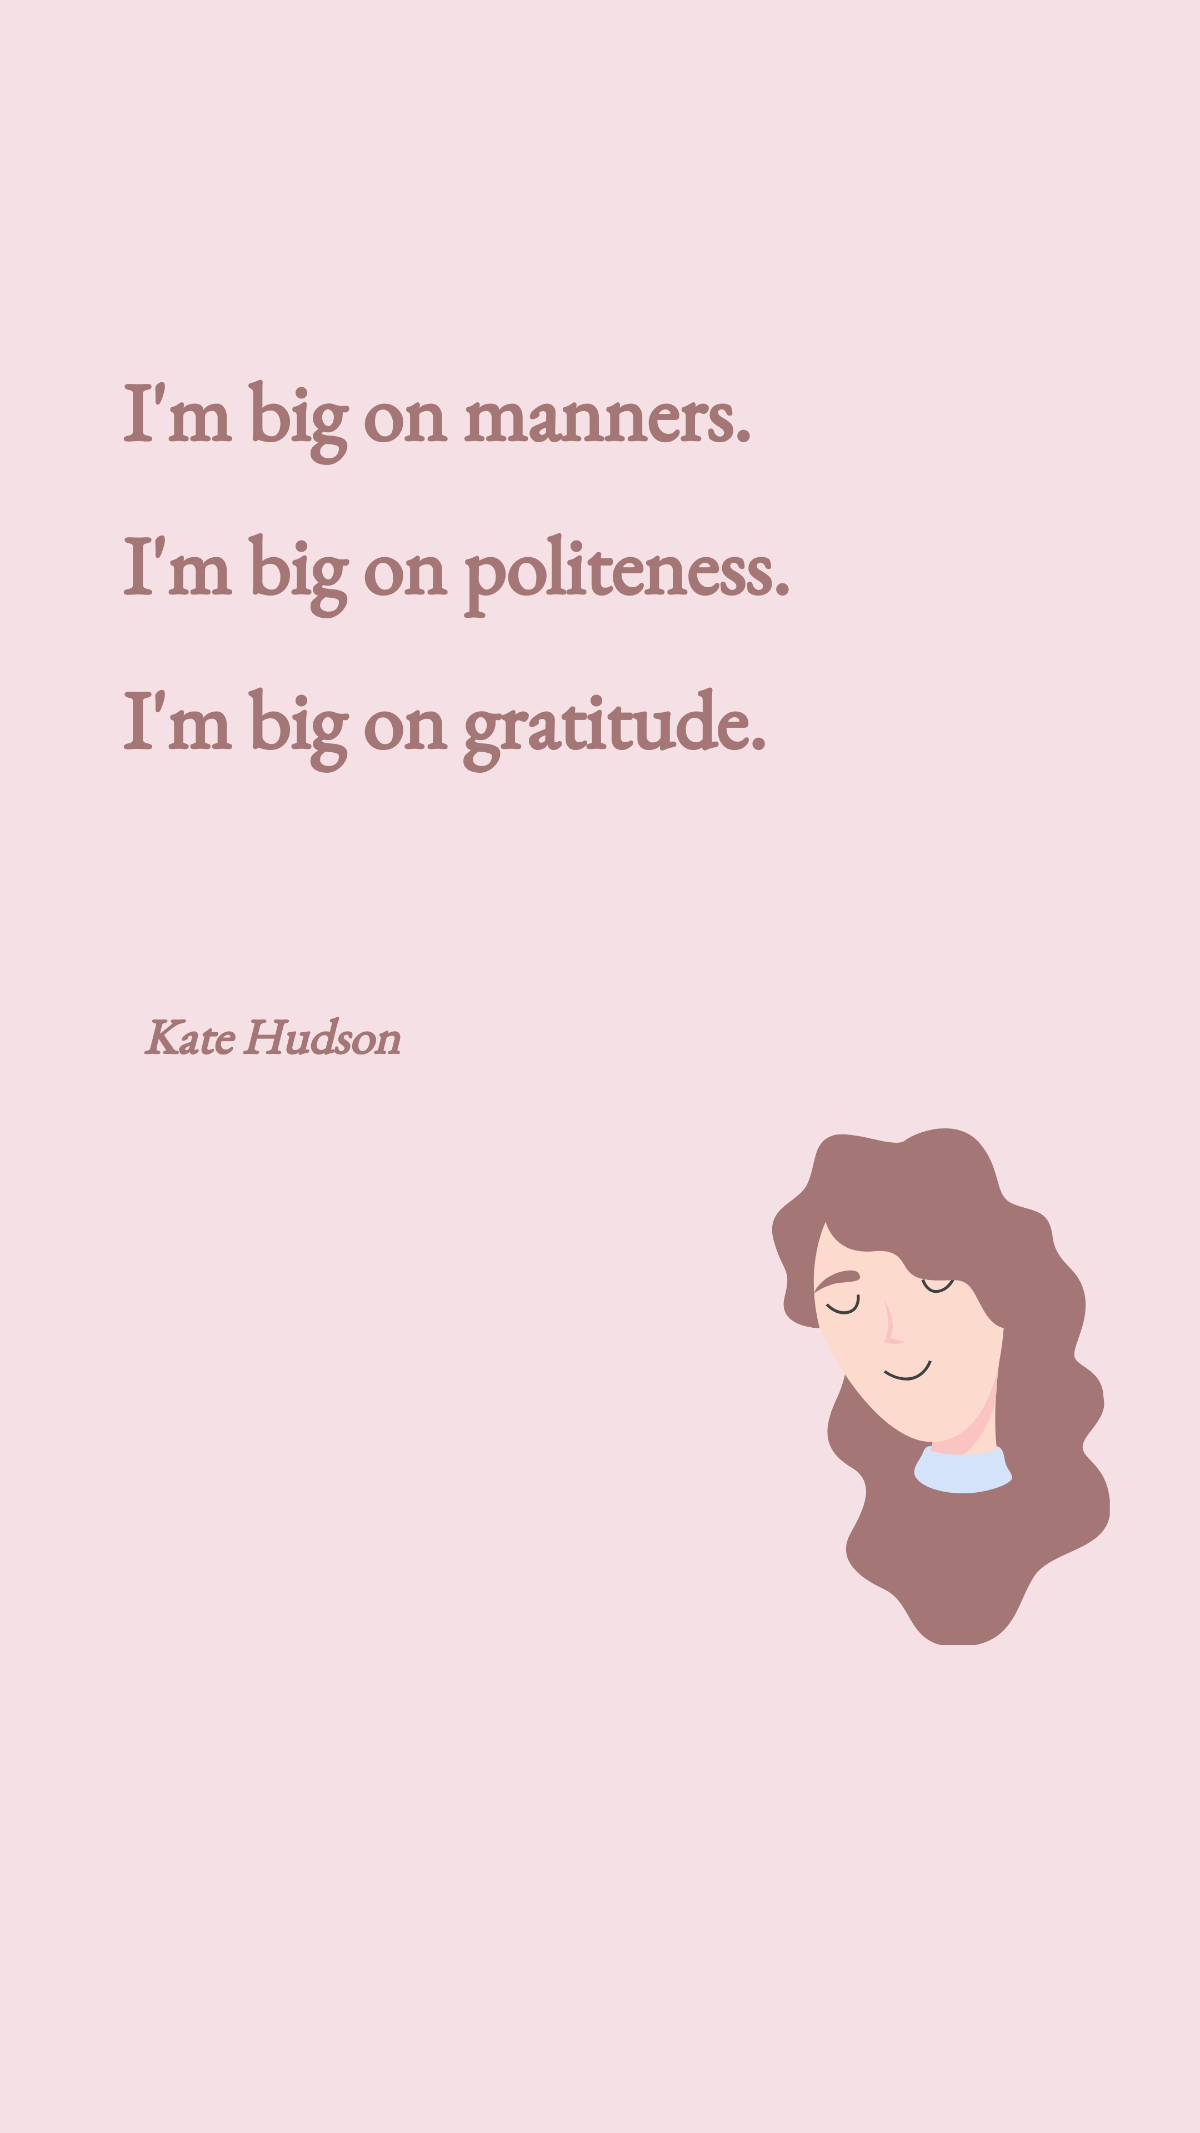 Kate Hudson - I'm big on manners. I'm big on politeness. I'm big on gratitude.